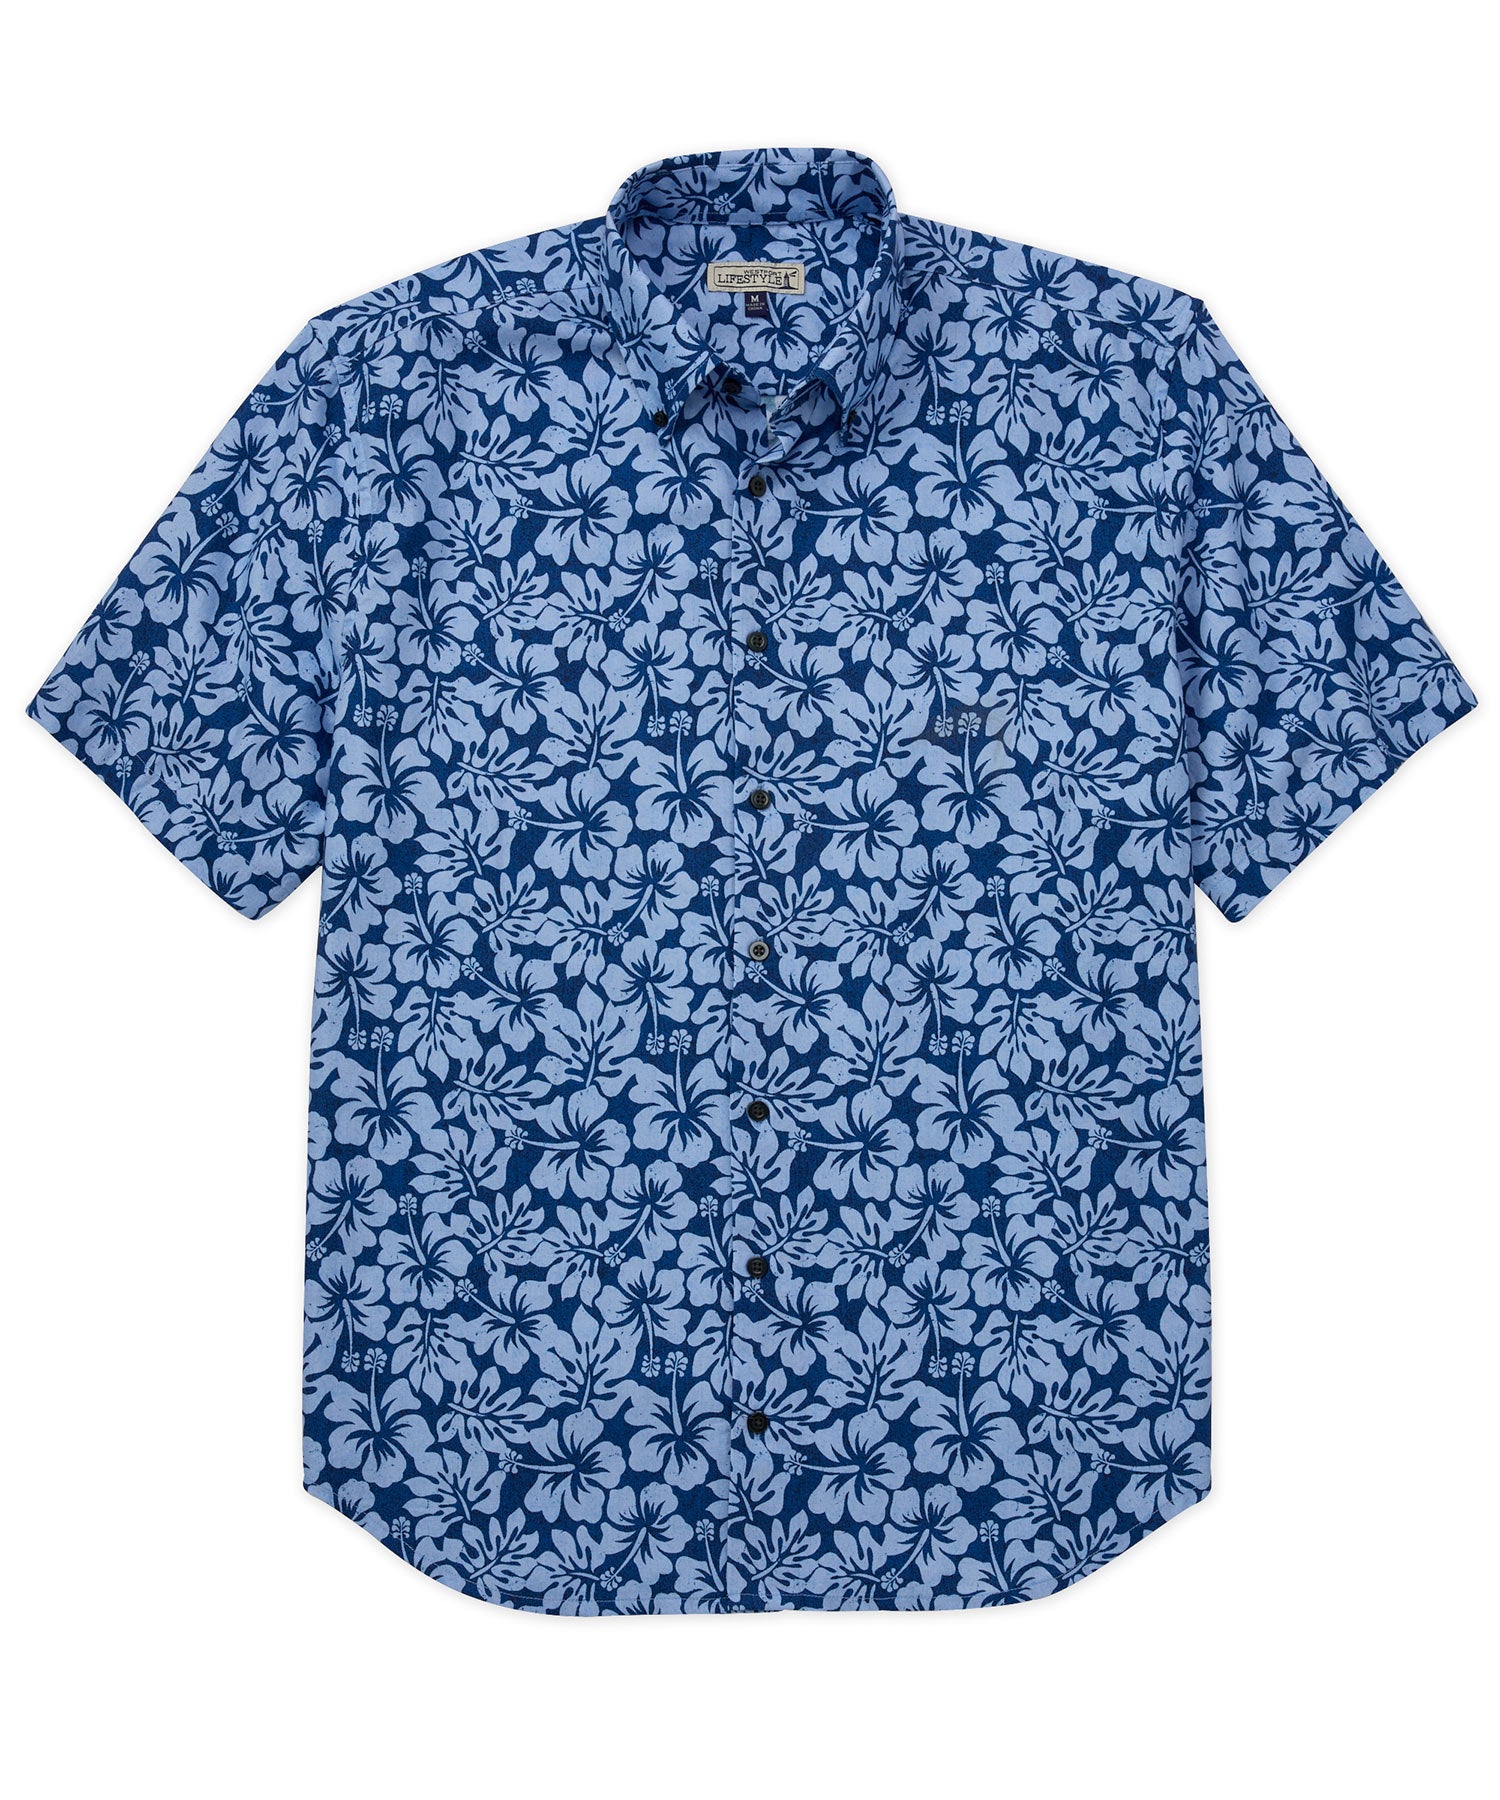 Westport Lifestyle Short Sleeve Hibiscus Print Sport Shirt, Men's Big & Tall